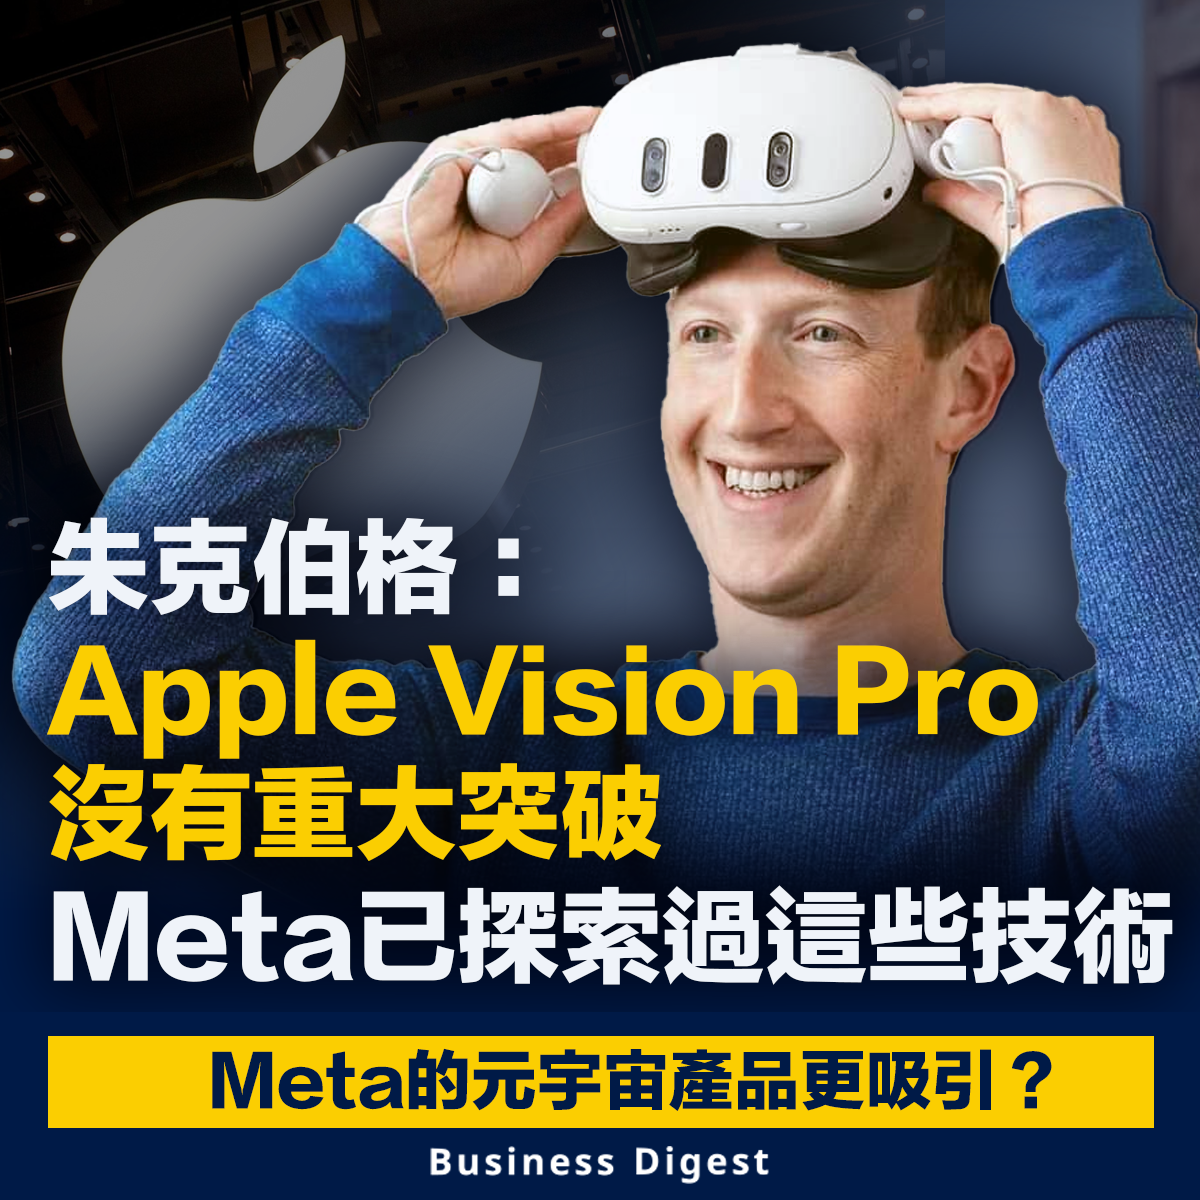 朱克伯格：Apple Vision Pro沒有重大突破，Meta已探索過這些技術